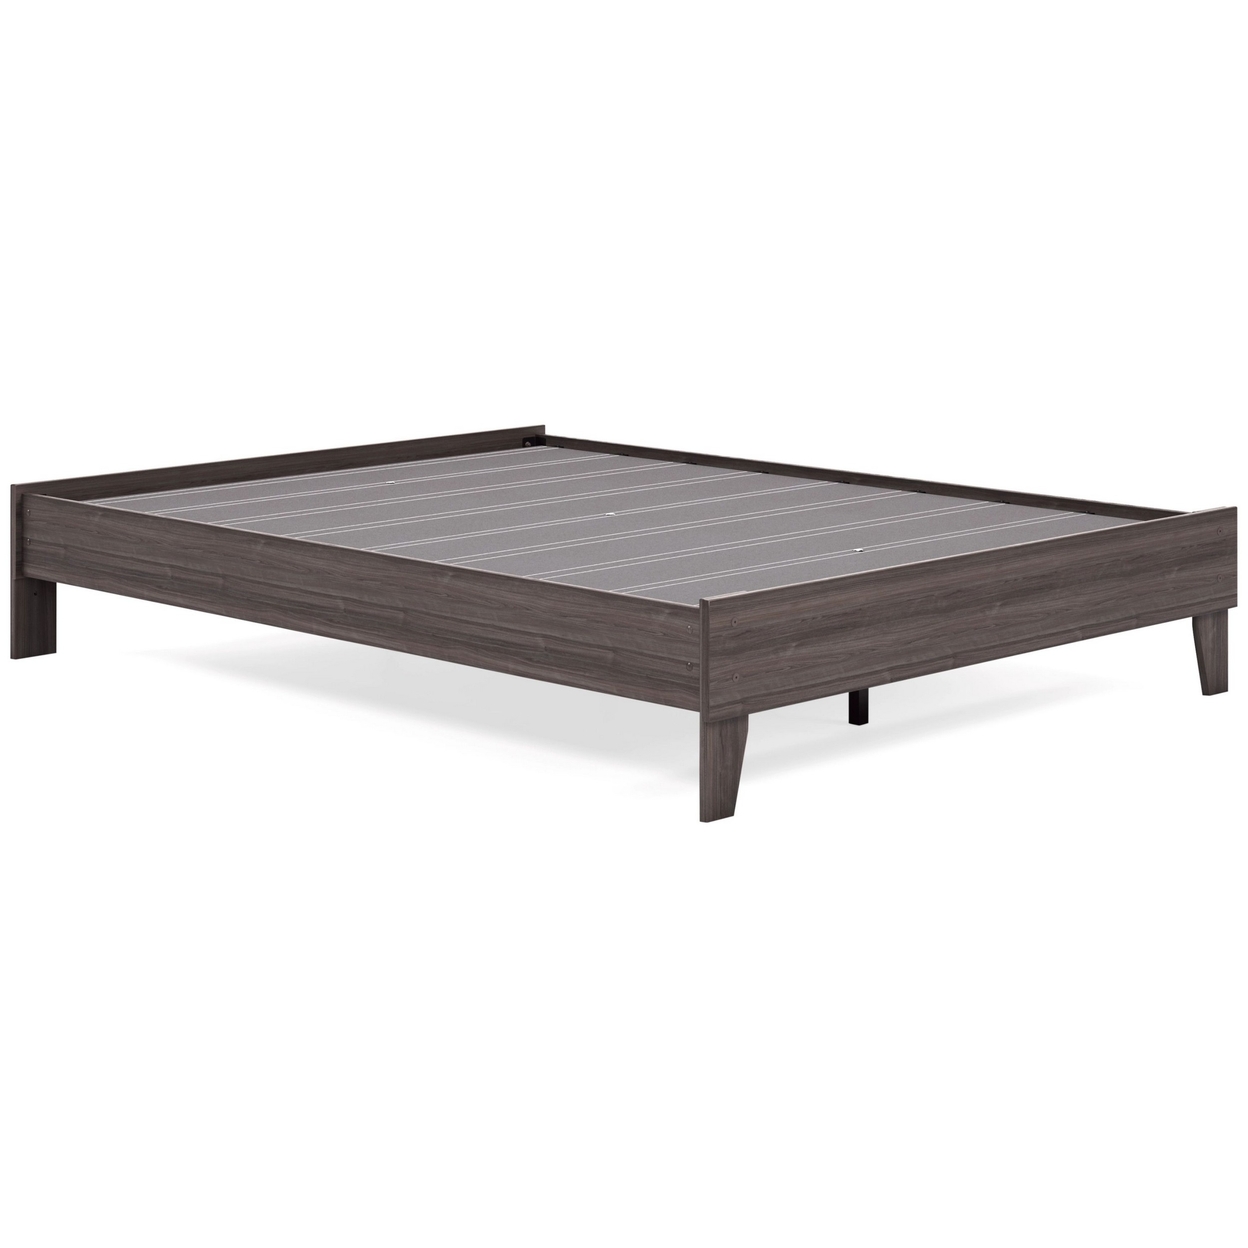 Zof Queen Size Platform Bed, Low Profile Footboard, Rails, Rustic Gray Wood- Saltoro Sherpi